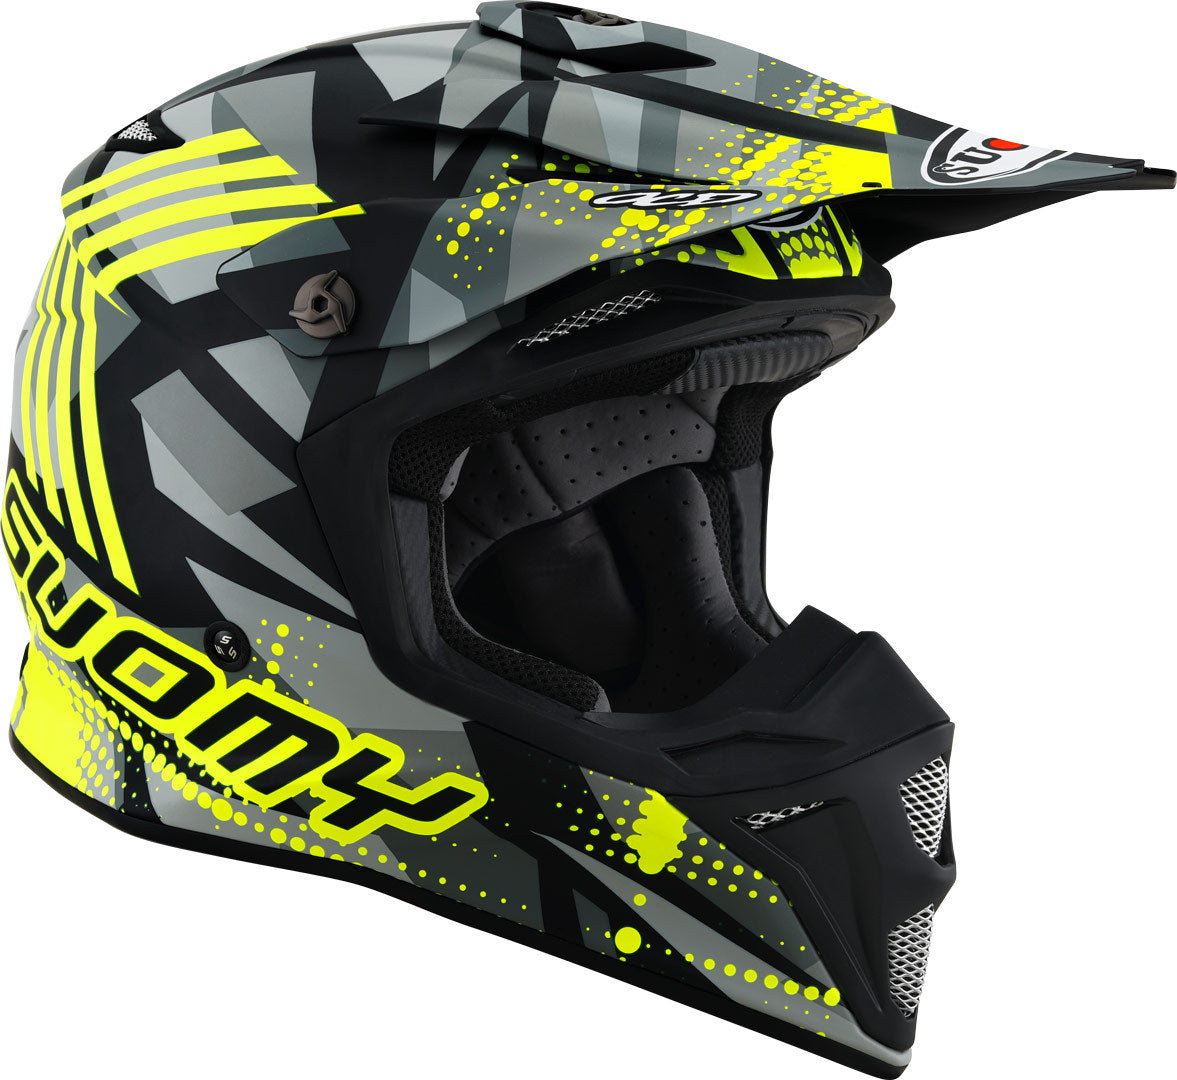 Buy Suomy MX Speed Pro Sergeant Motocross Helmet Online